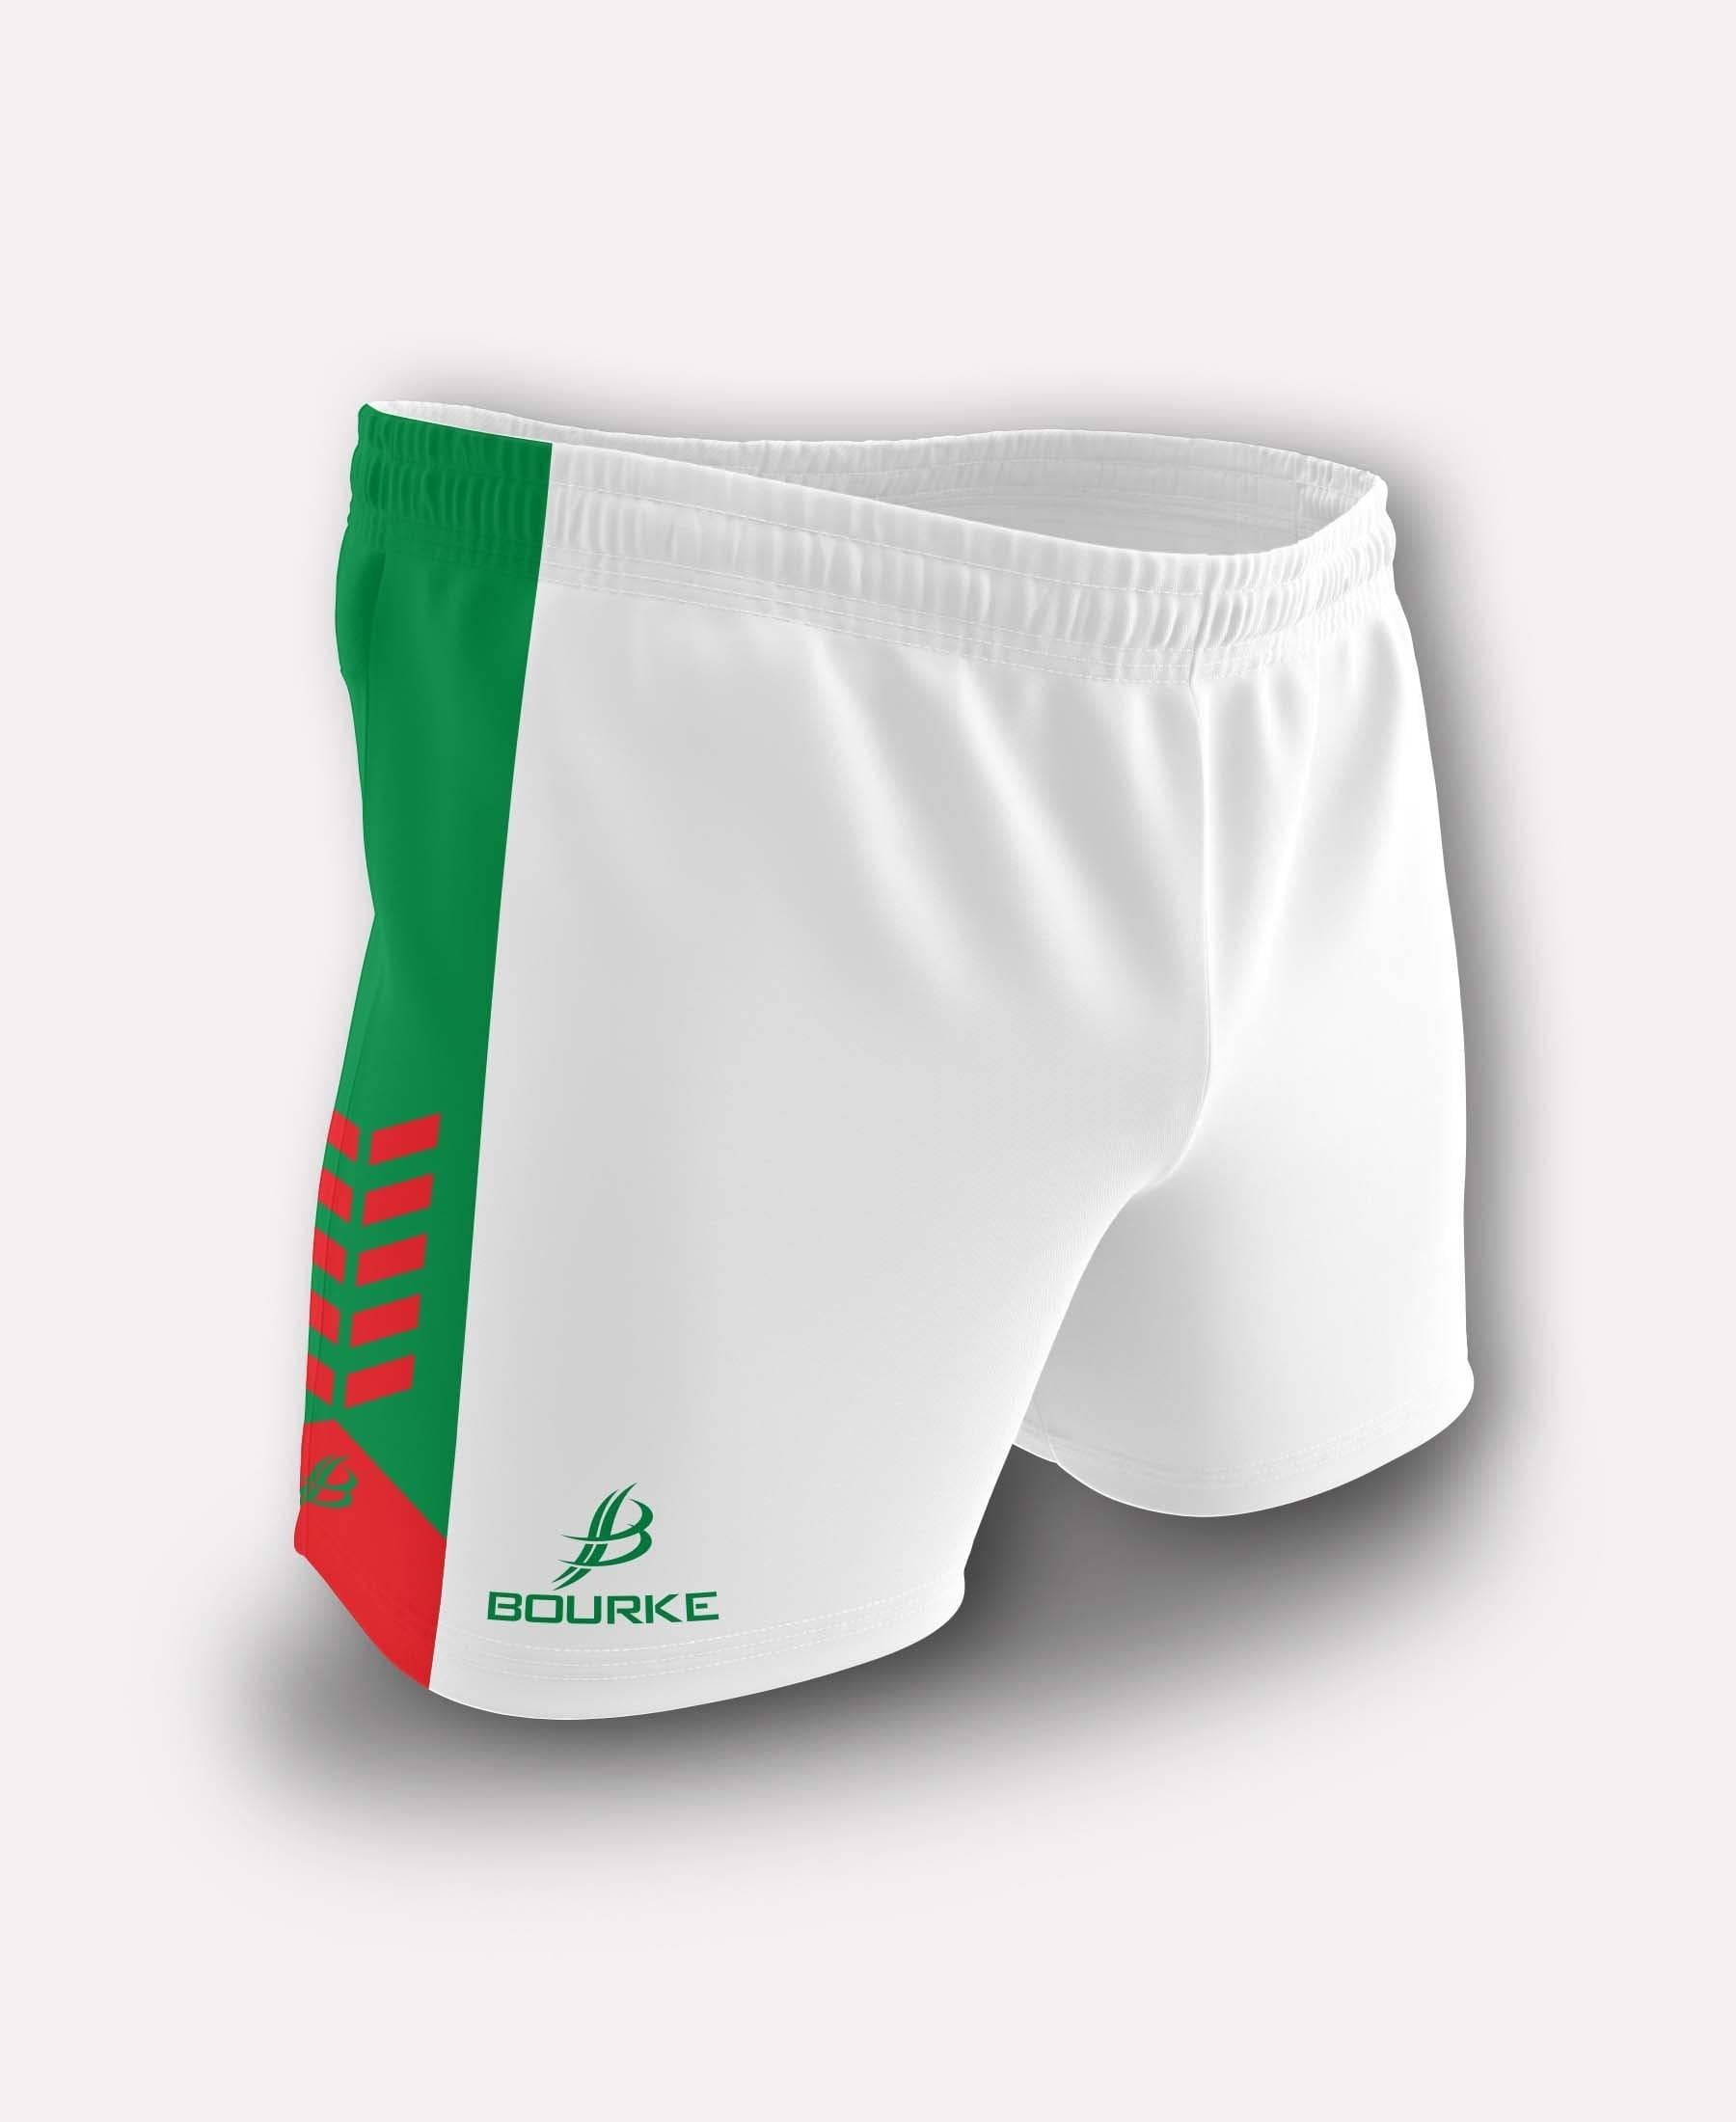 Chevron Kids Shorts (White/Green/Red) - Bourke Sports Limited